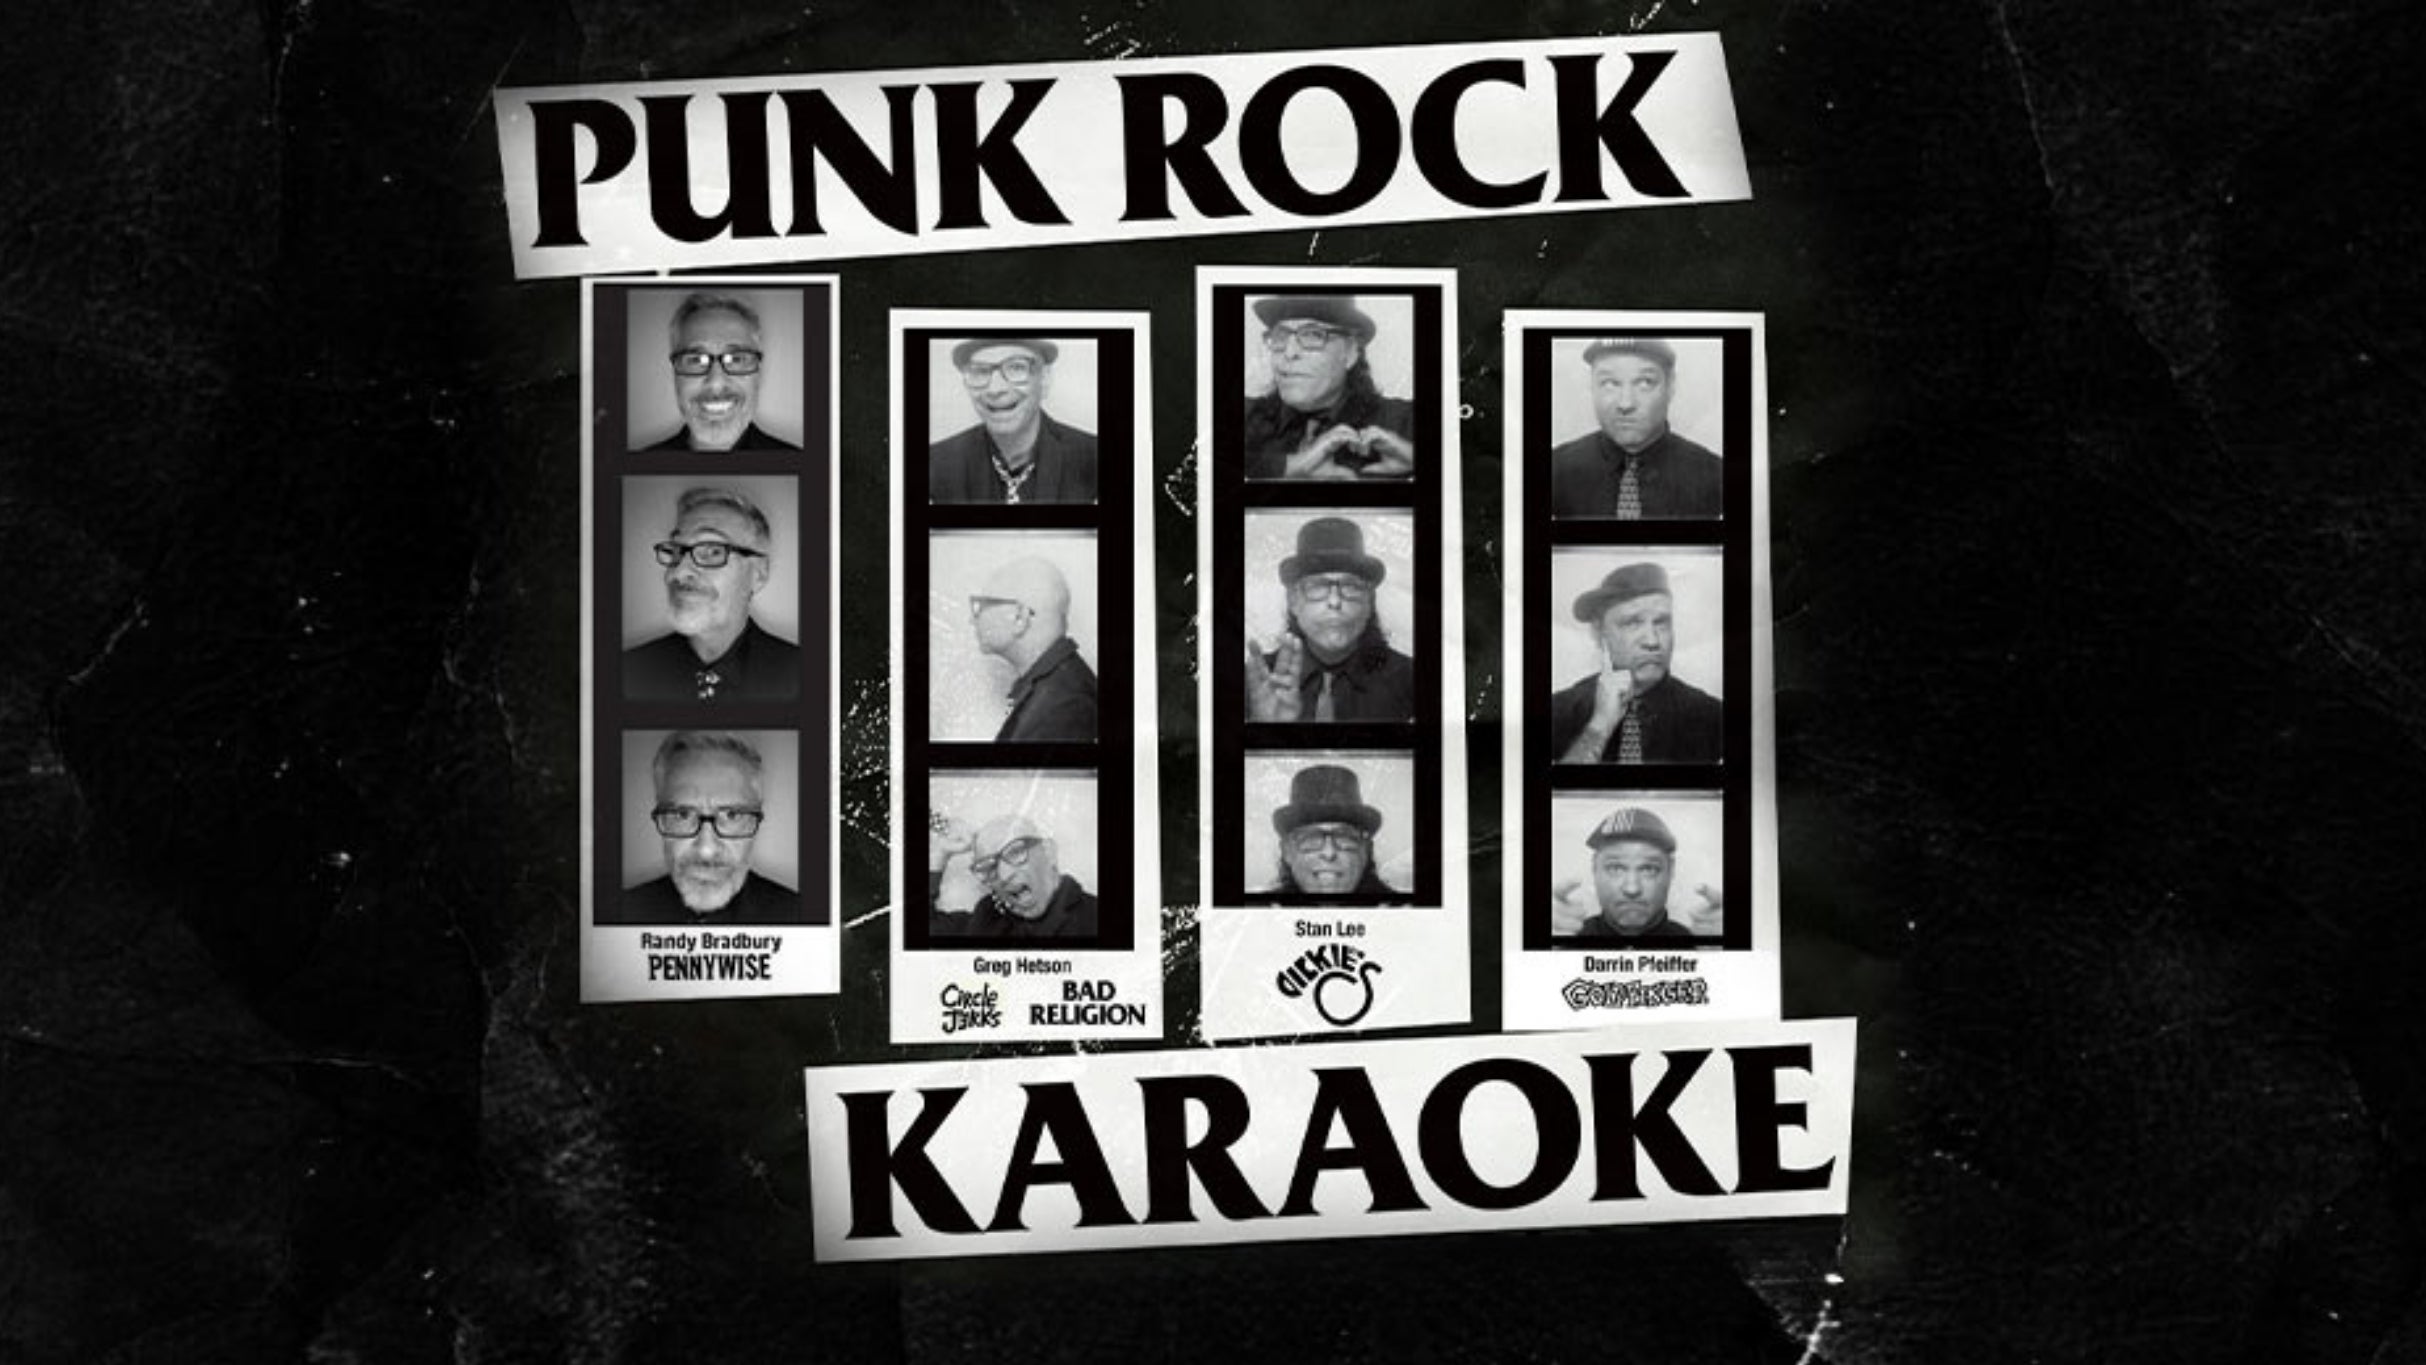 Punk Rock Karaoke in Santa Ana promo photo for Ticketmaster presale offer code